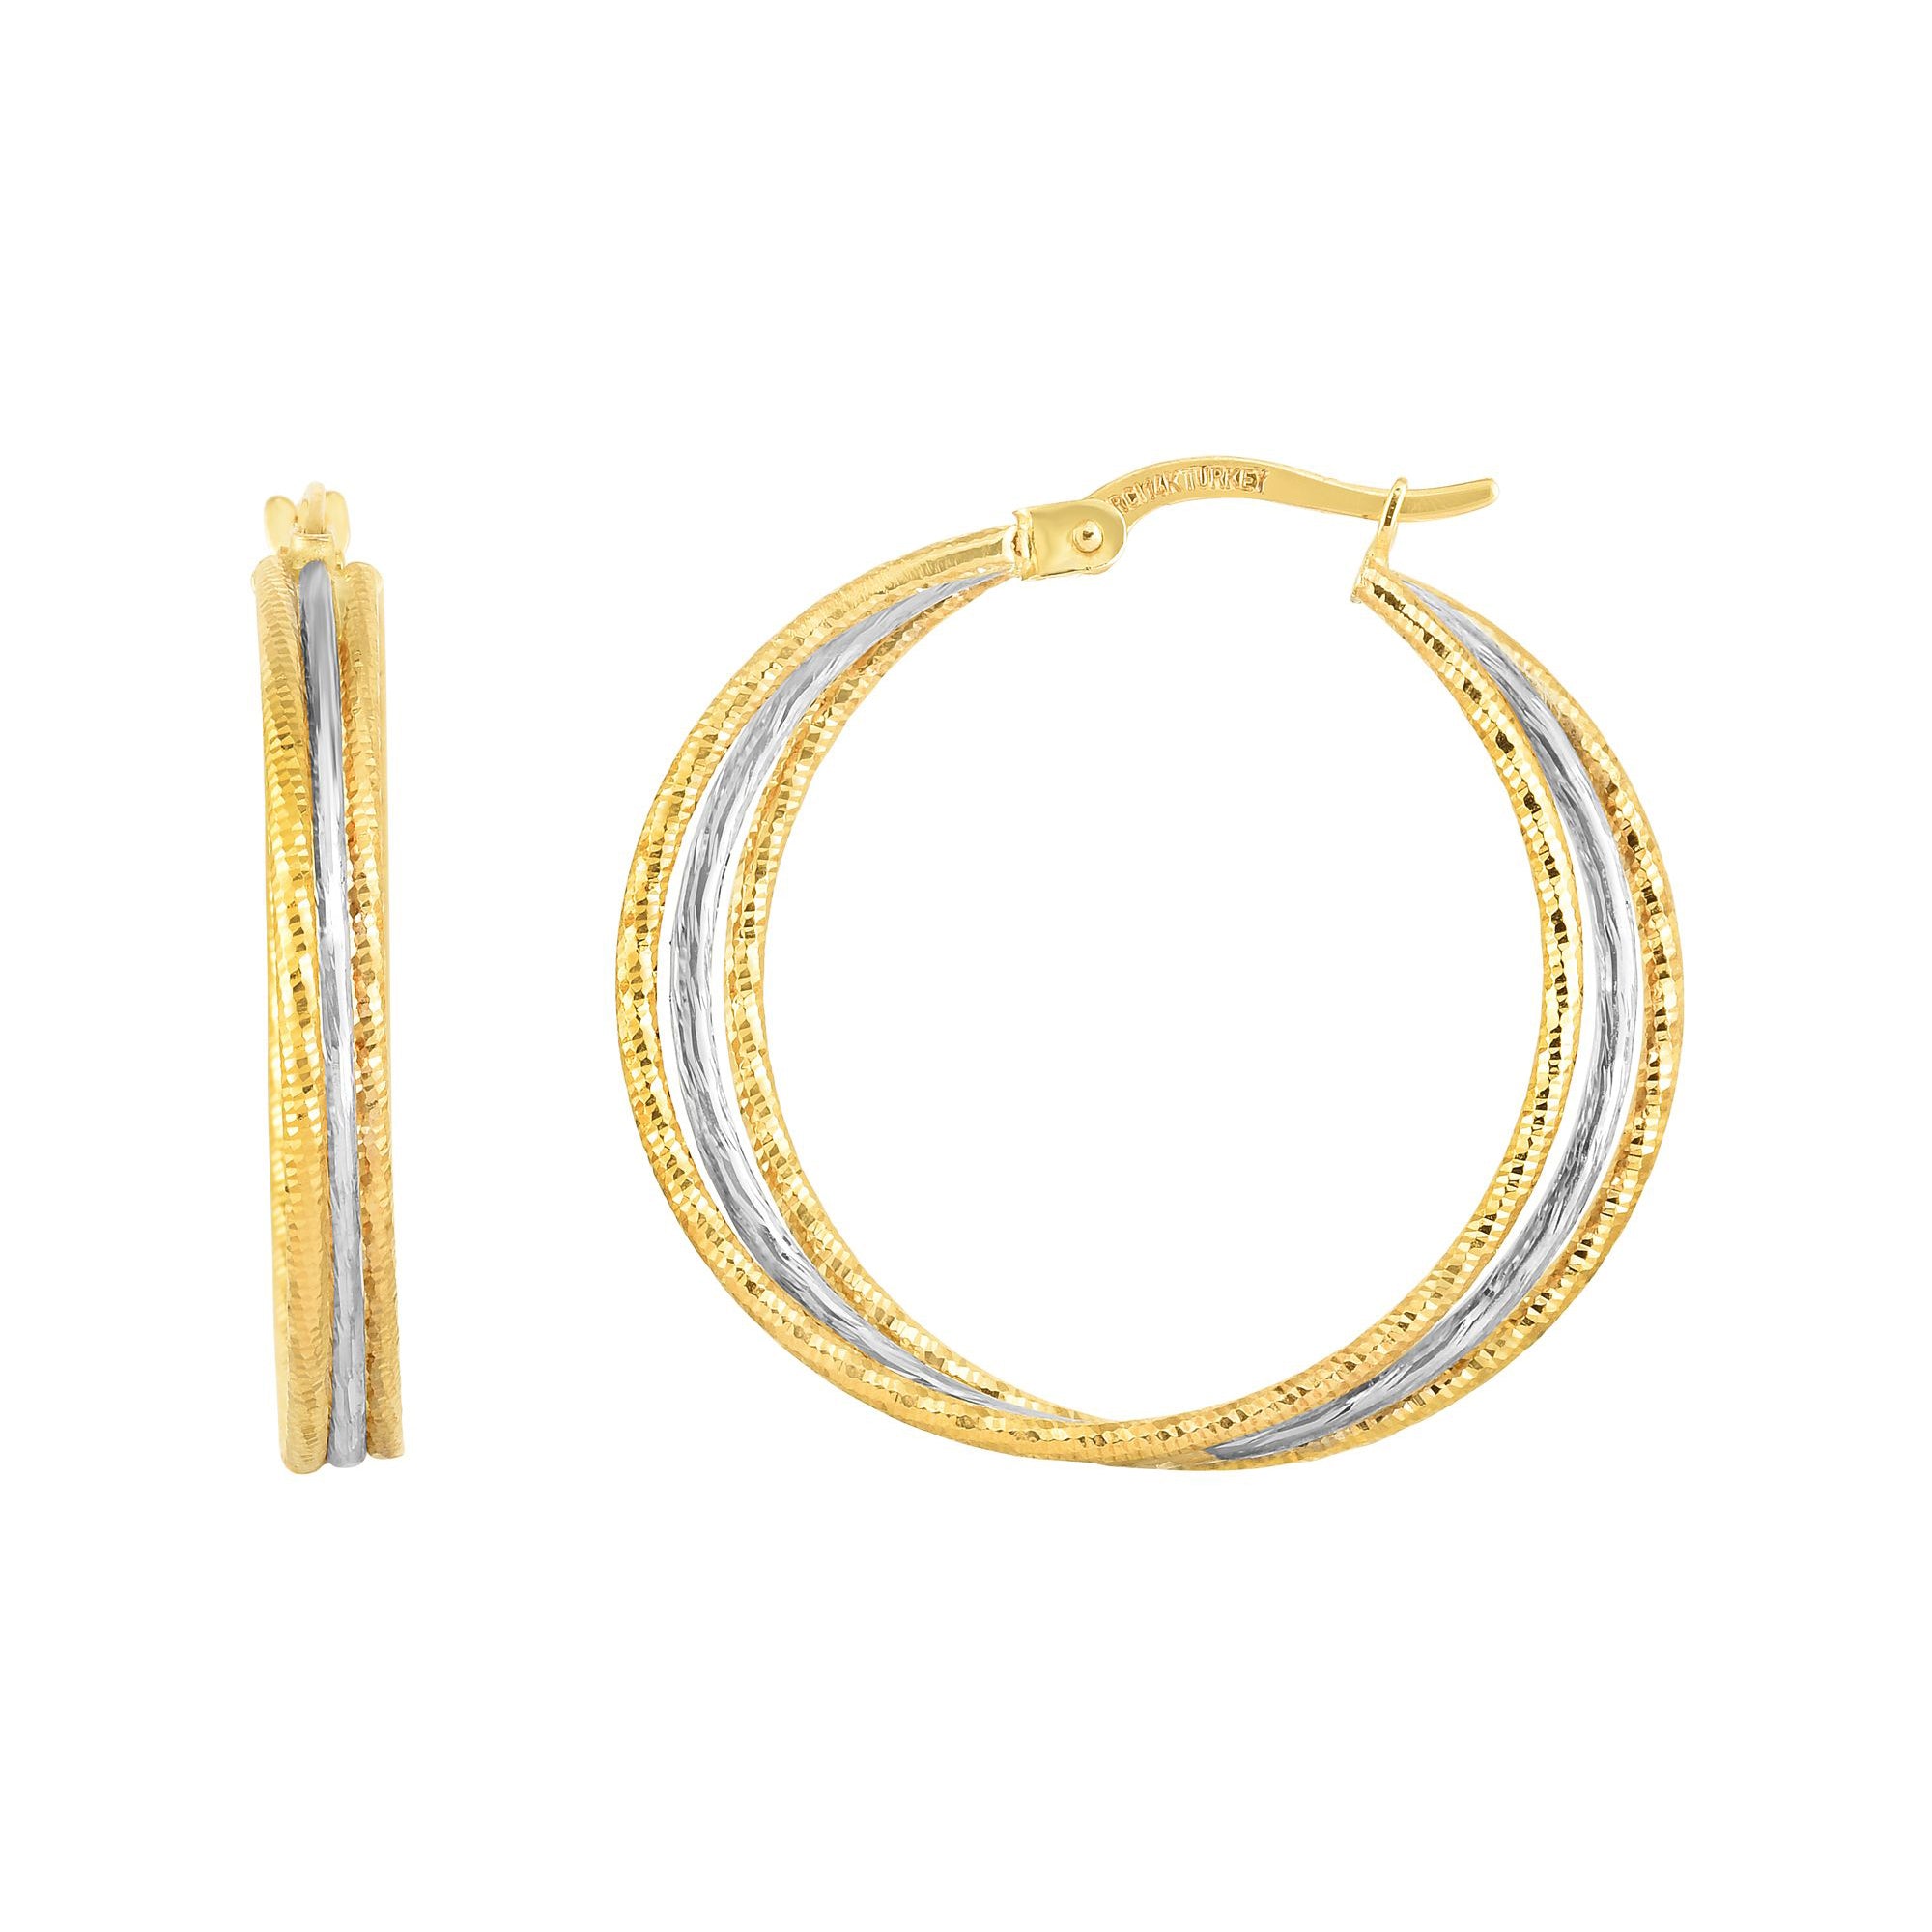 14K Gold Yellow And White Finish Hoop Earrings, Diameter 30mm fine designer jewelry for men and women